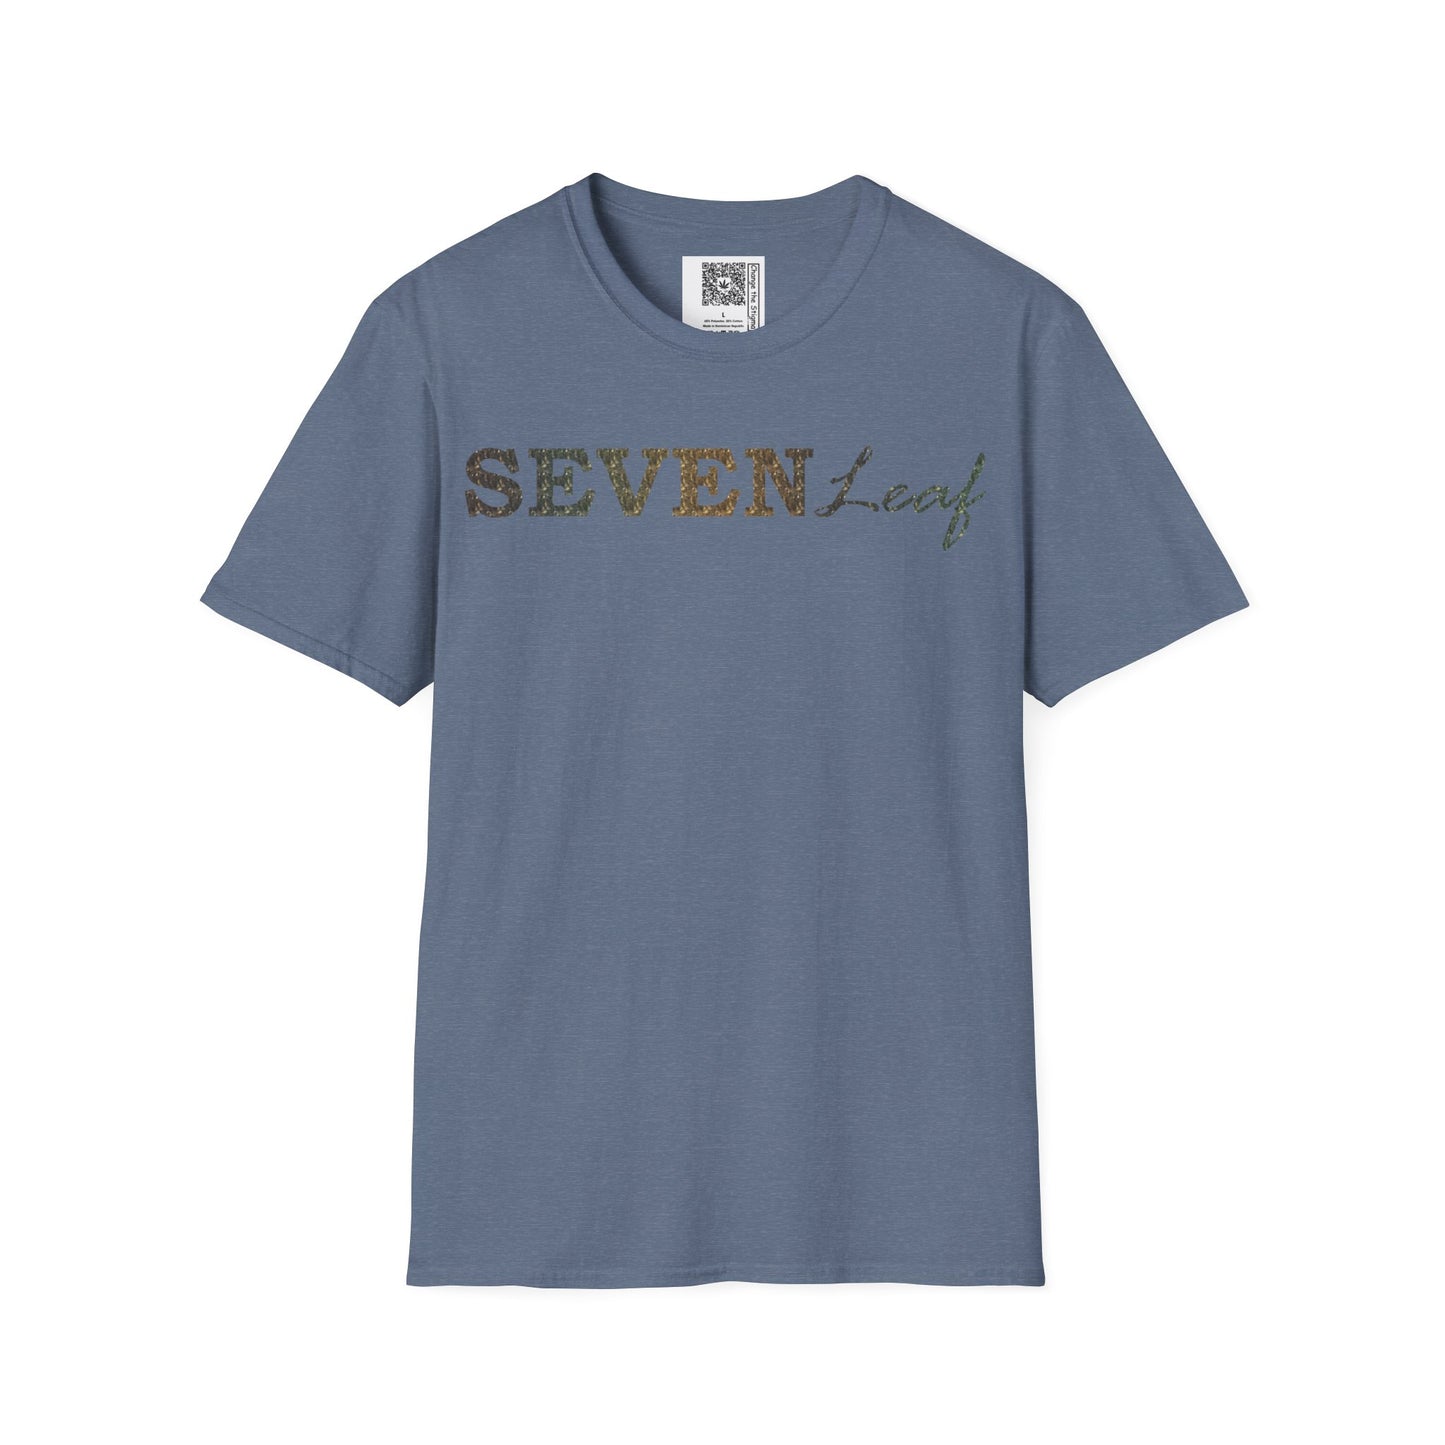 Change the Stigma SEVEN LEAF Weed Shirt